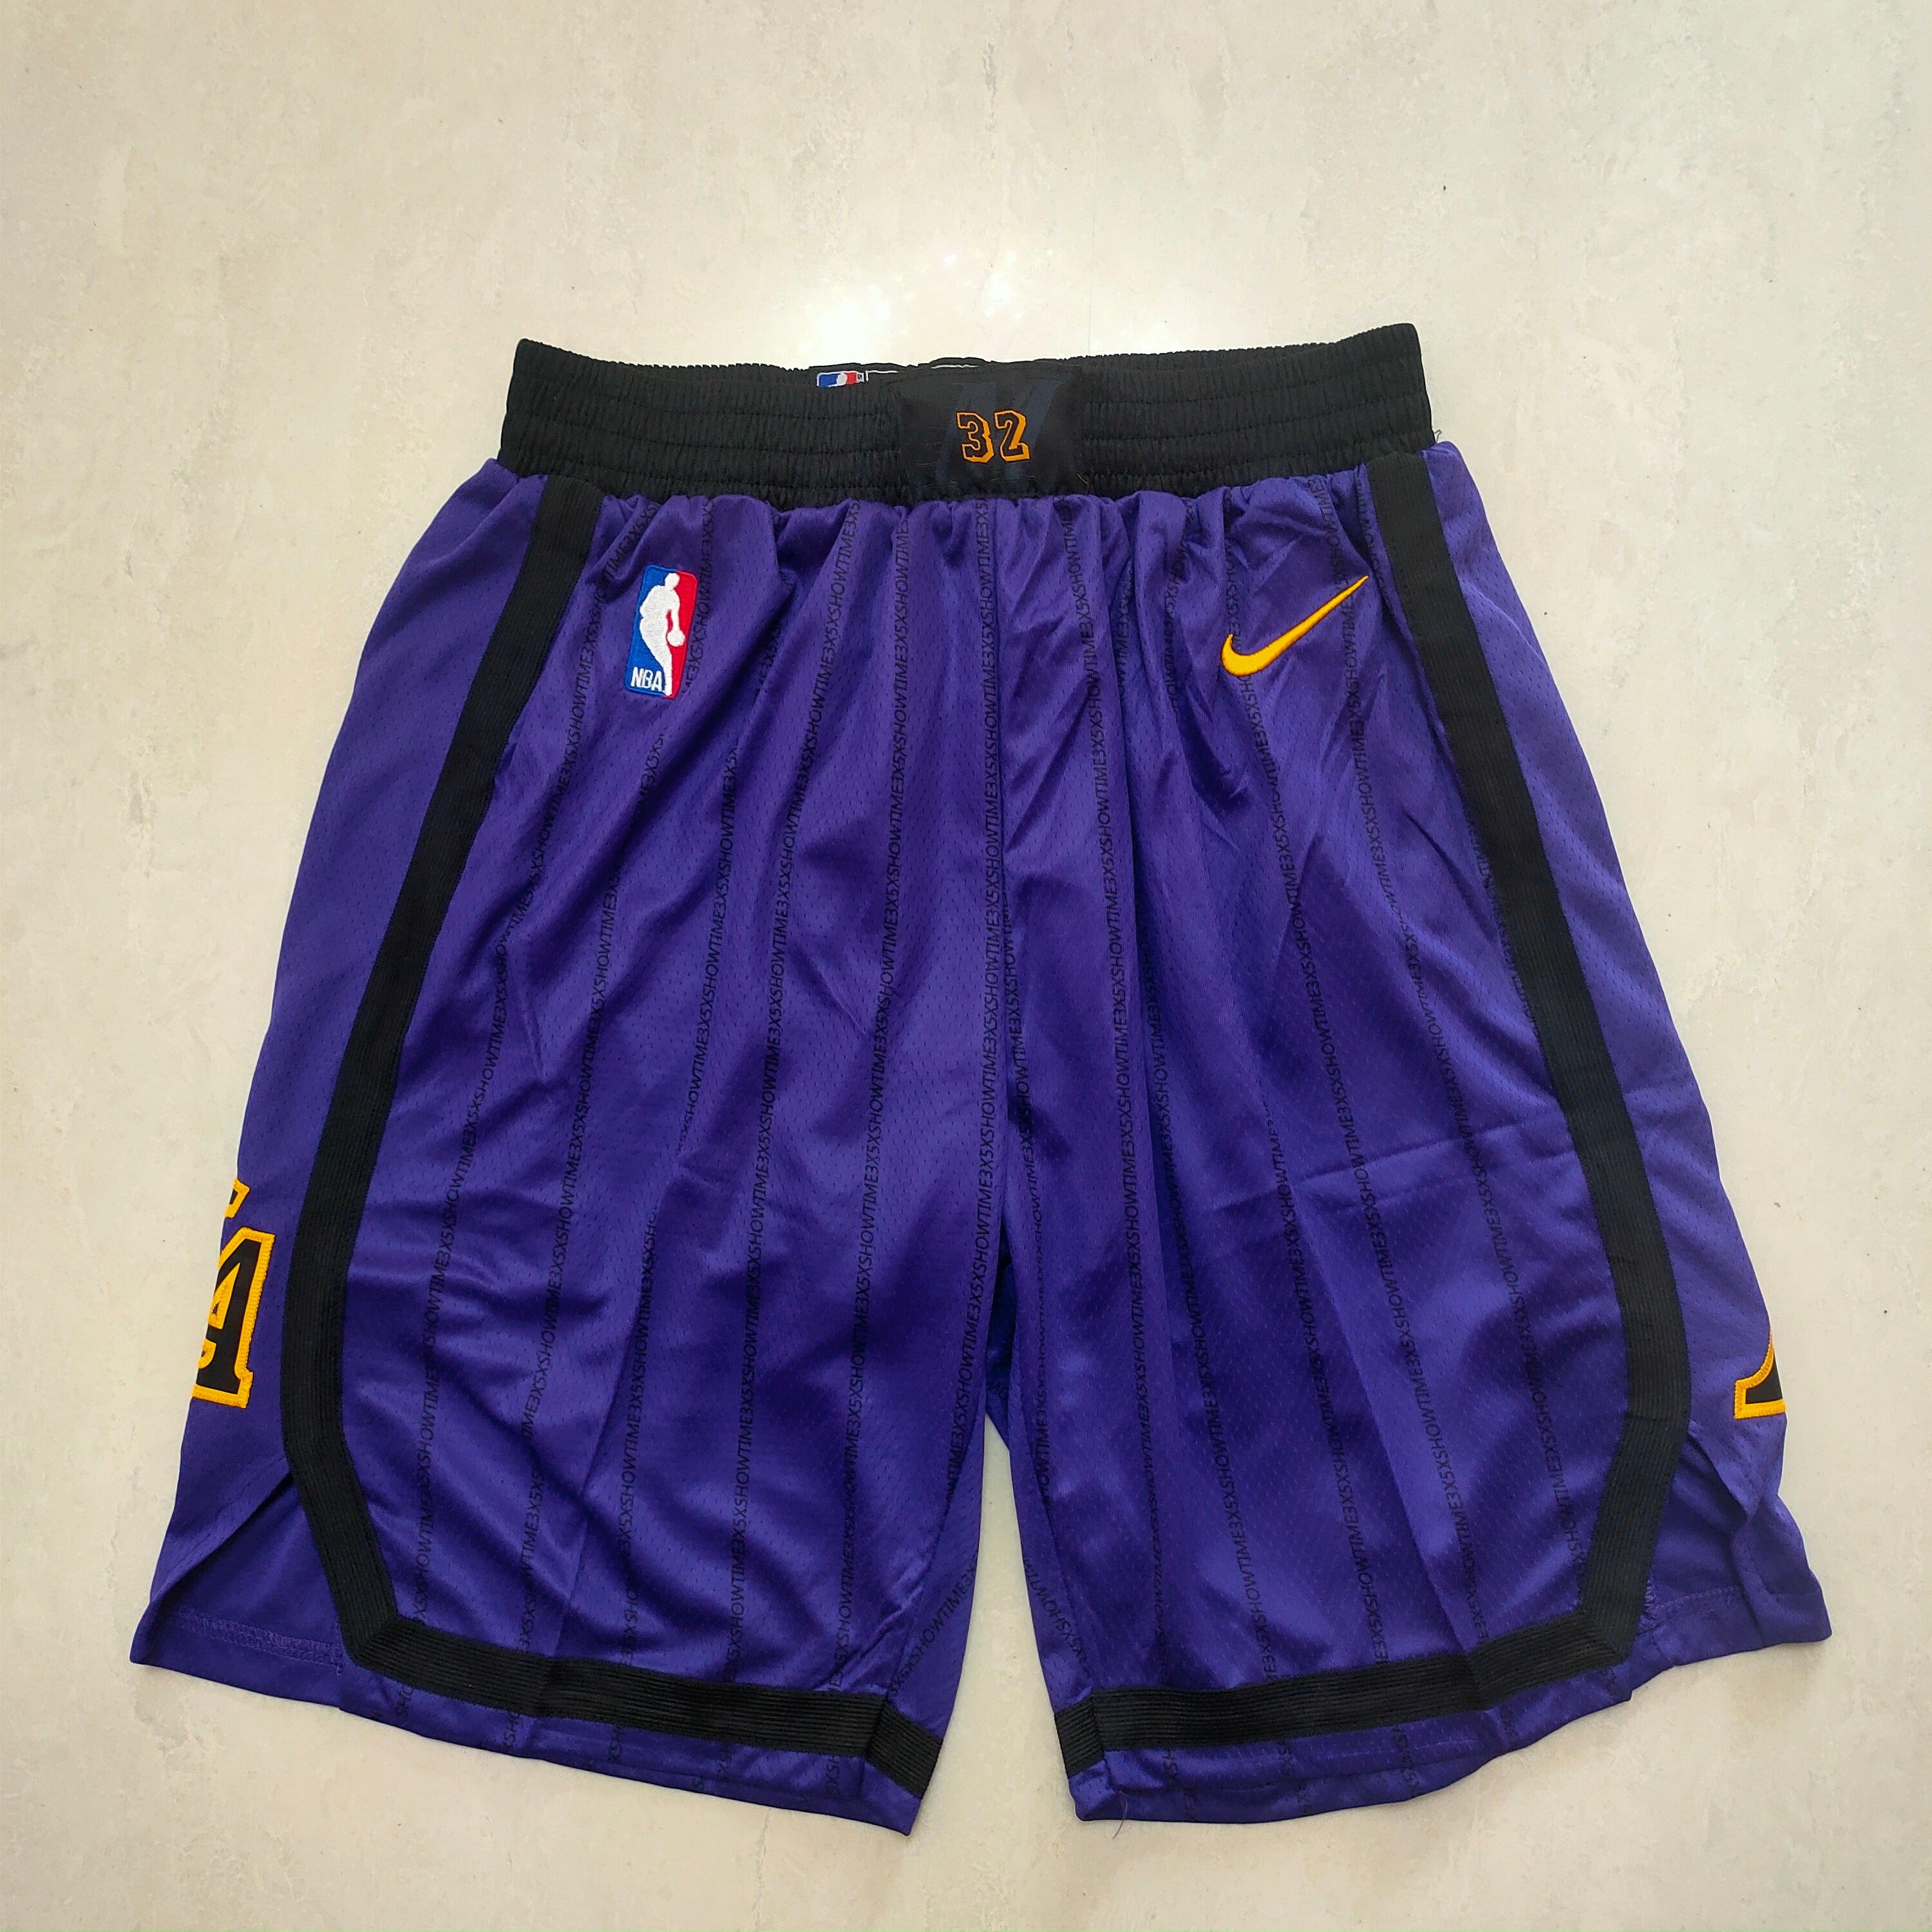 Short violet des Lakers